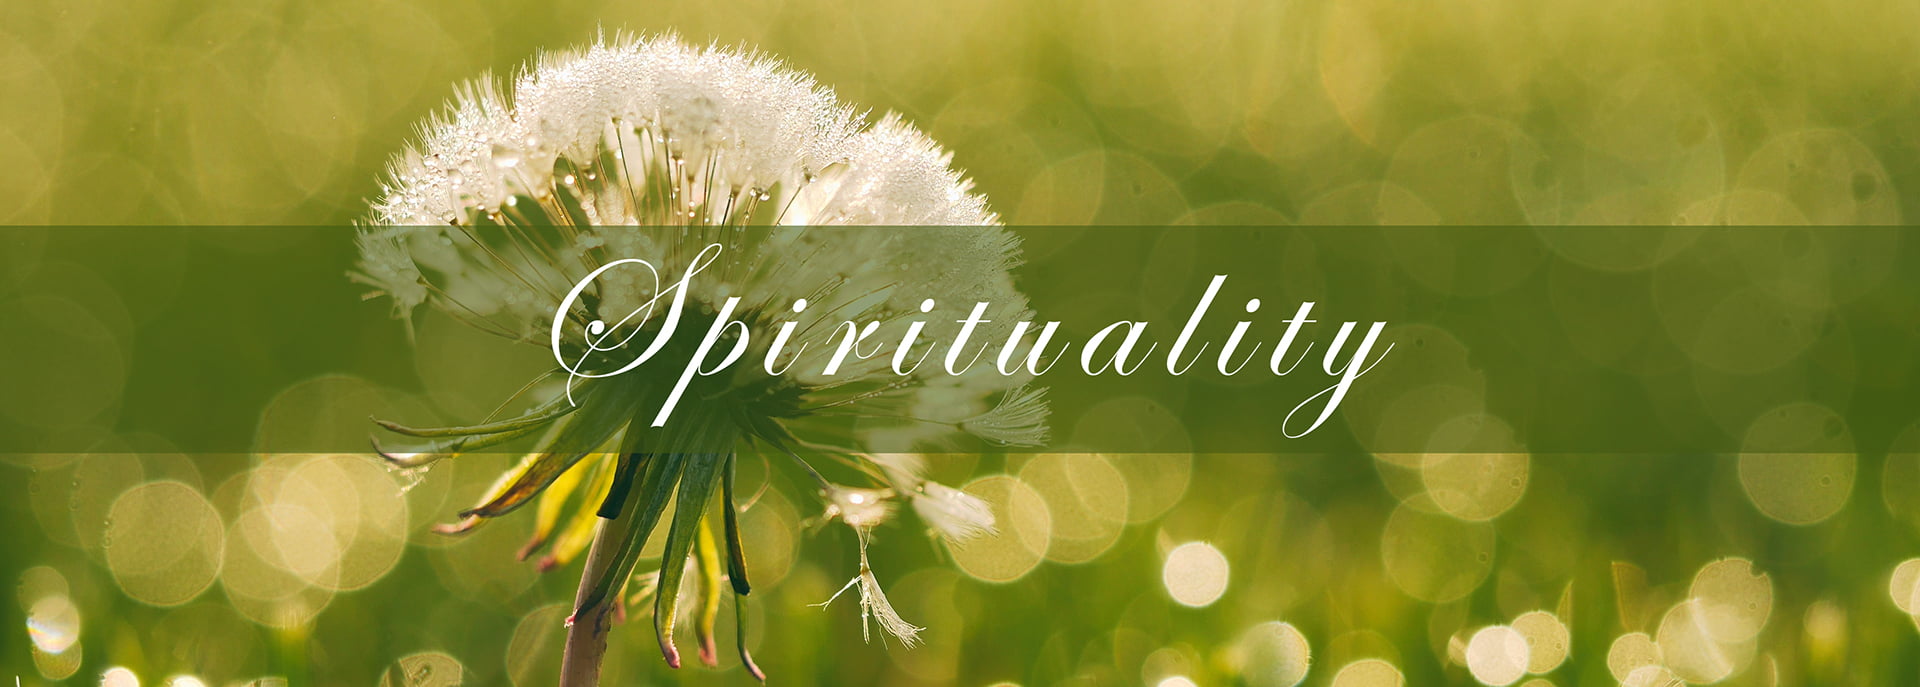 Spirituality counselling